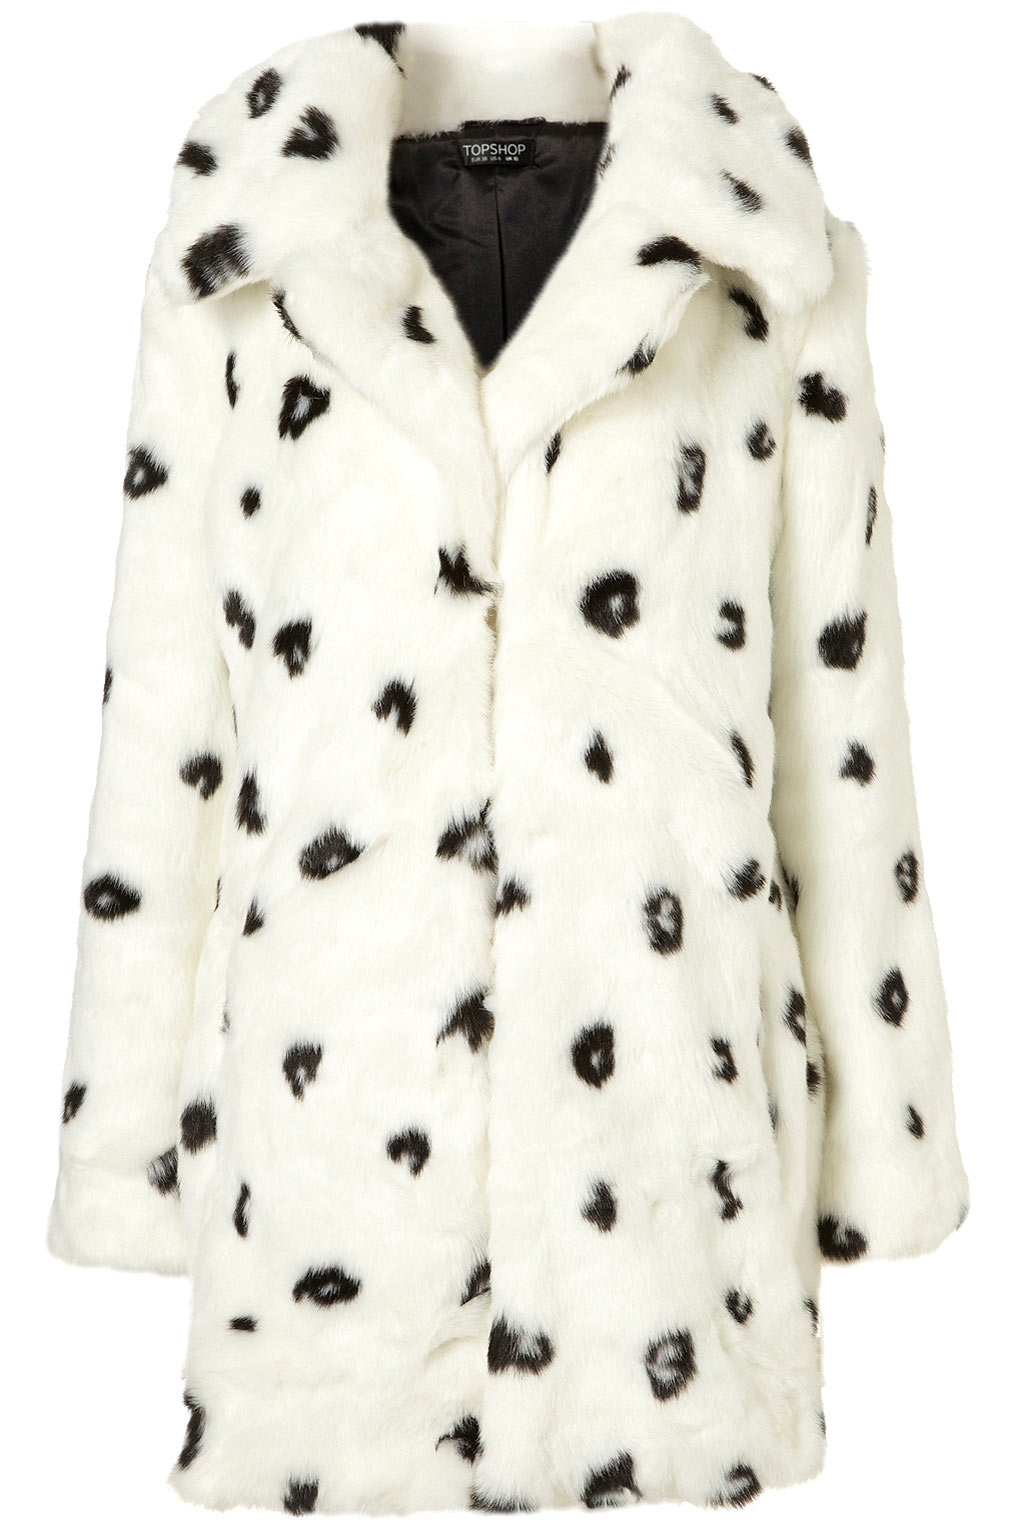 Topshop Dalmatian Oversized Faux Fur Coat in Black | Lyst